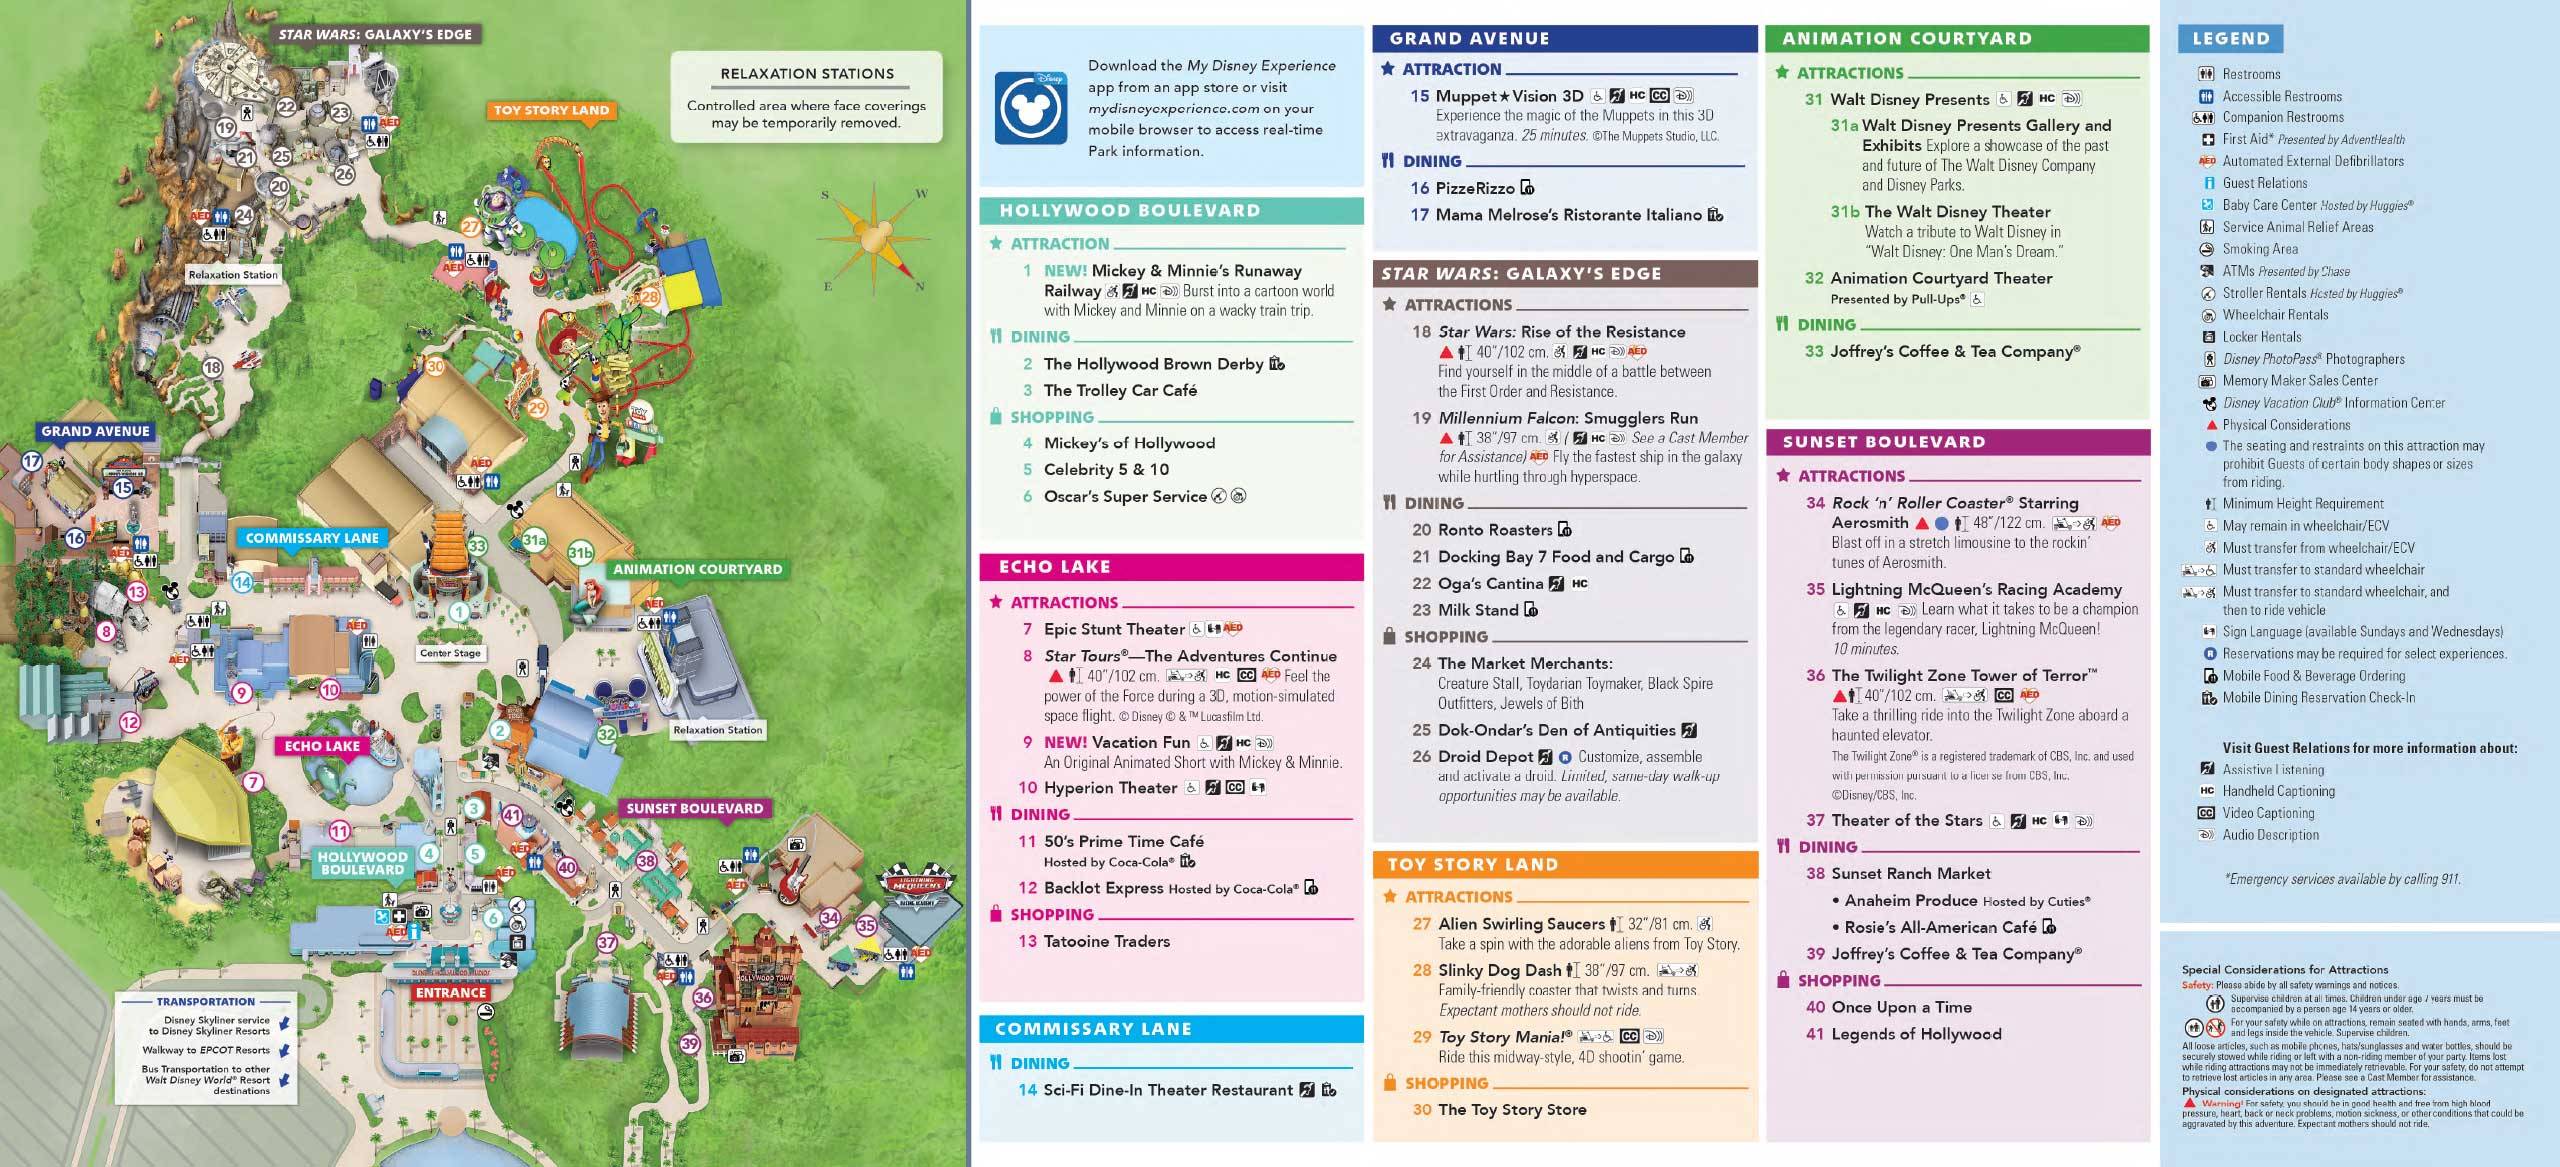 Disney's Hollywood Studios Guide Map July 2020 - Back